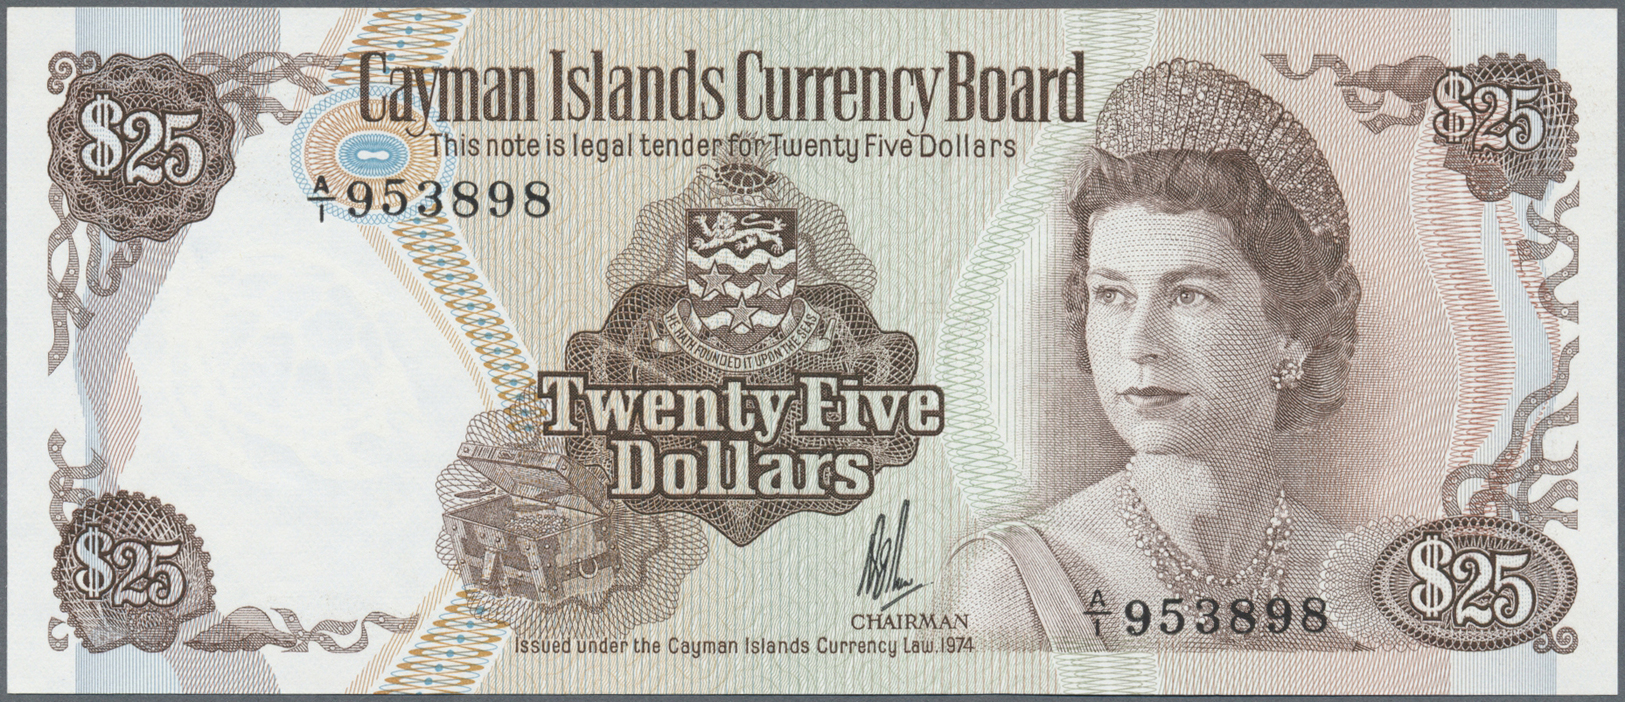 00508 Cayman Islands: 25 Dollars L.1974 P. 8 In Condition: AUNC. - Cayman Islands